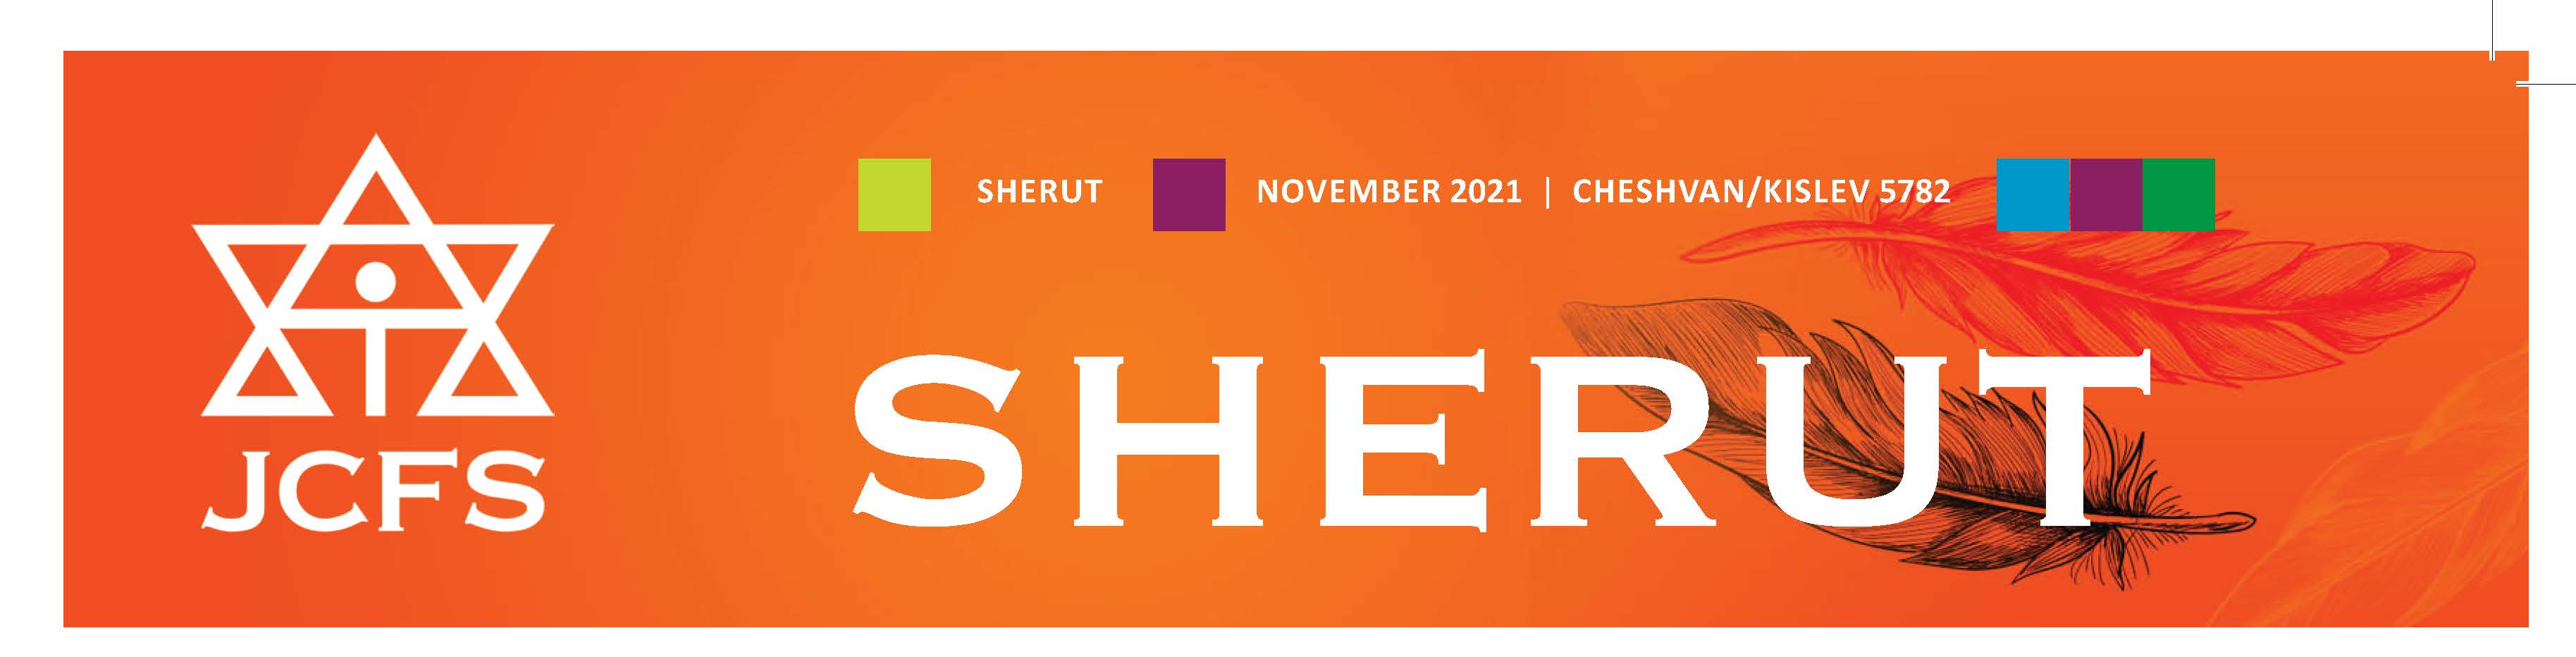 Sheryt Nov 2021 - banner